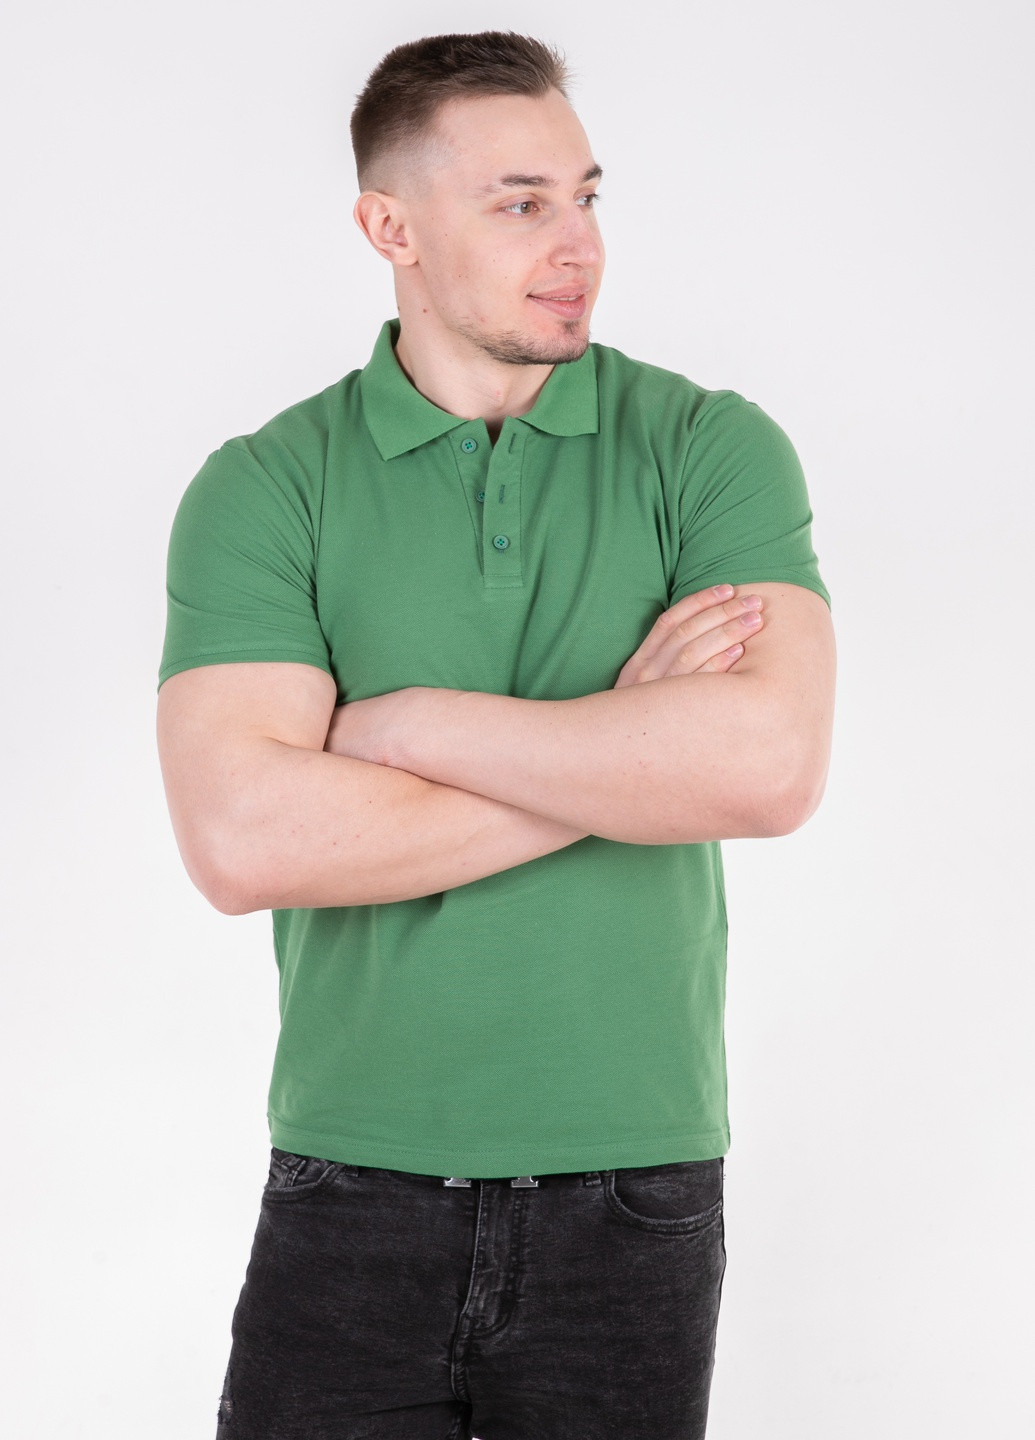 Зеленая футболка-футболка поло мужская для мужчин TvoePolo однотонная